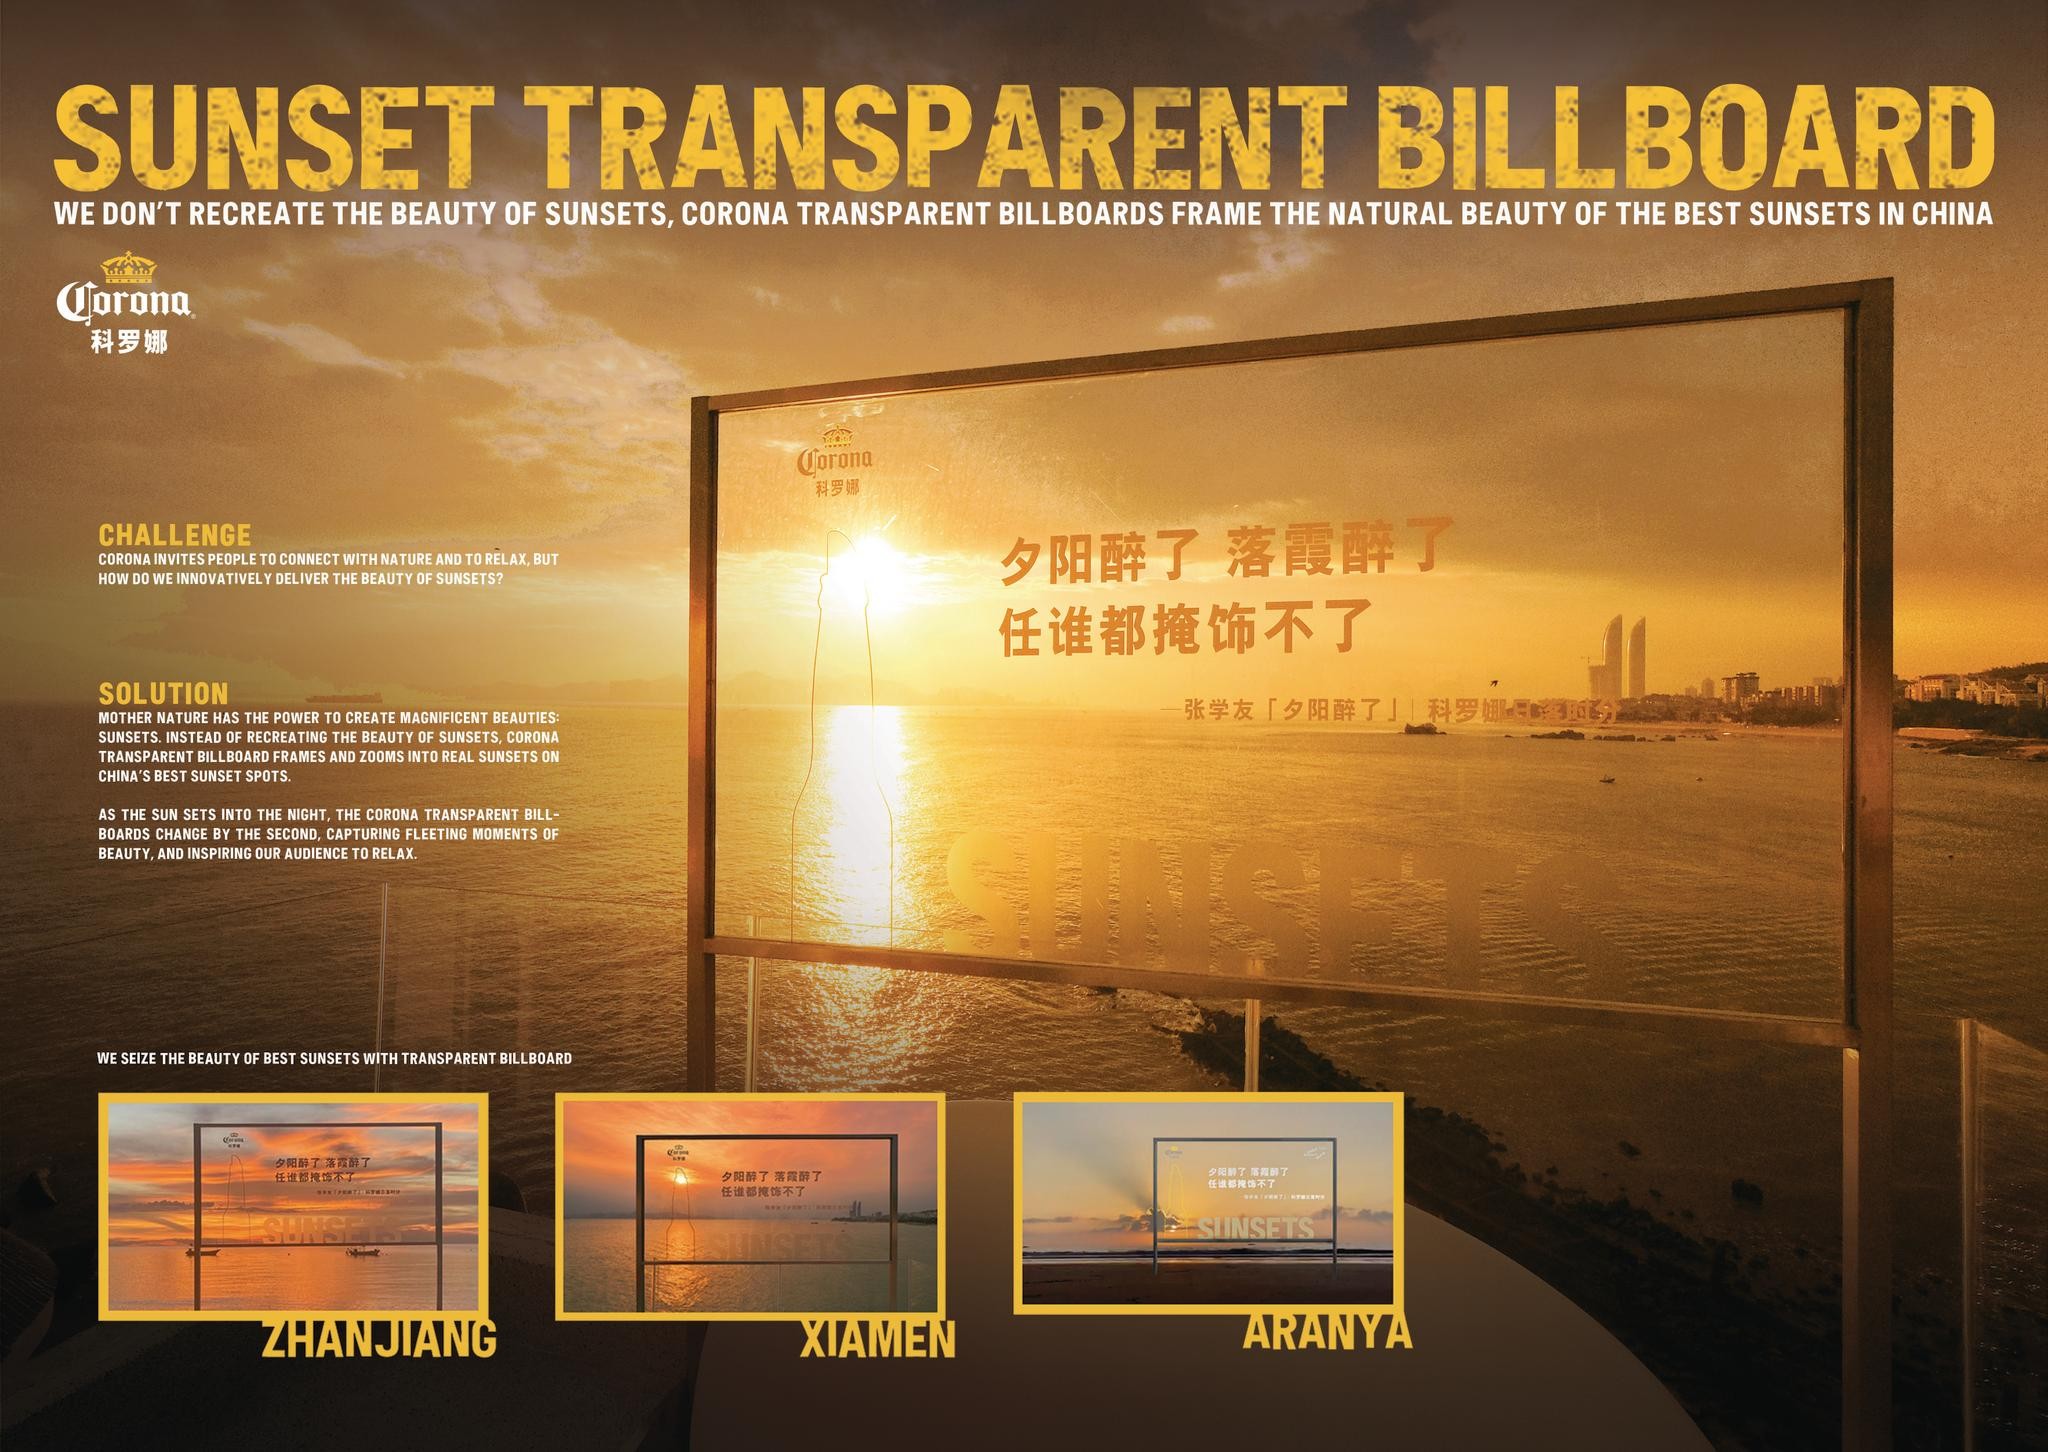 Corona: Sunset Transparent Billboard